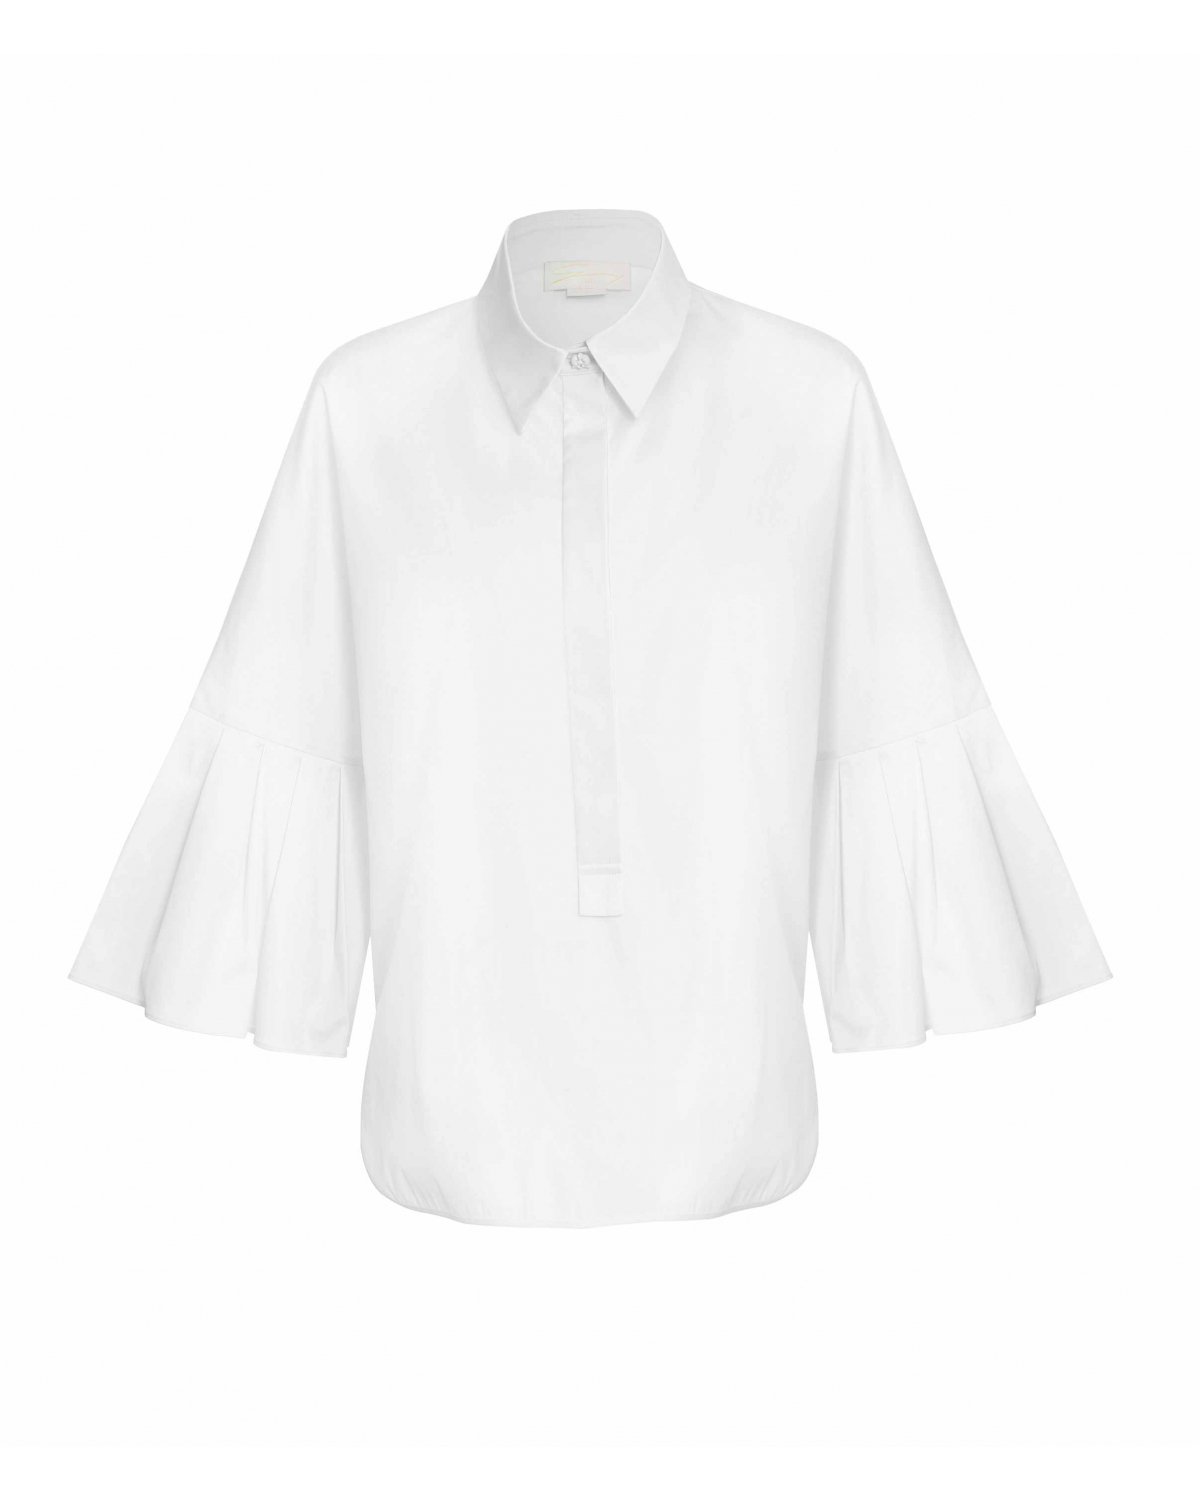 White flounced sleeve shirt | 73_74, Mid season sale -40%, Summer Sale | Genny